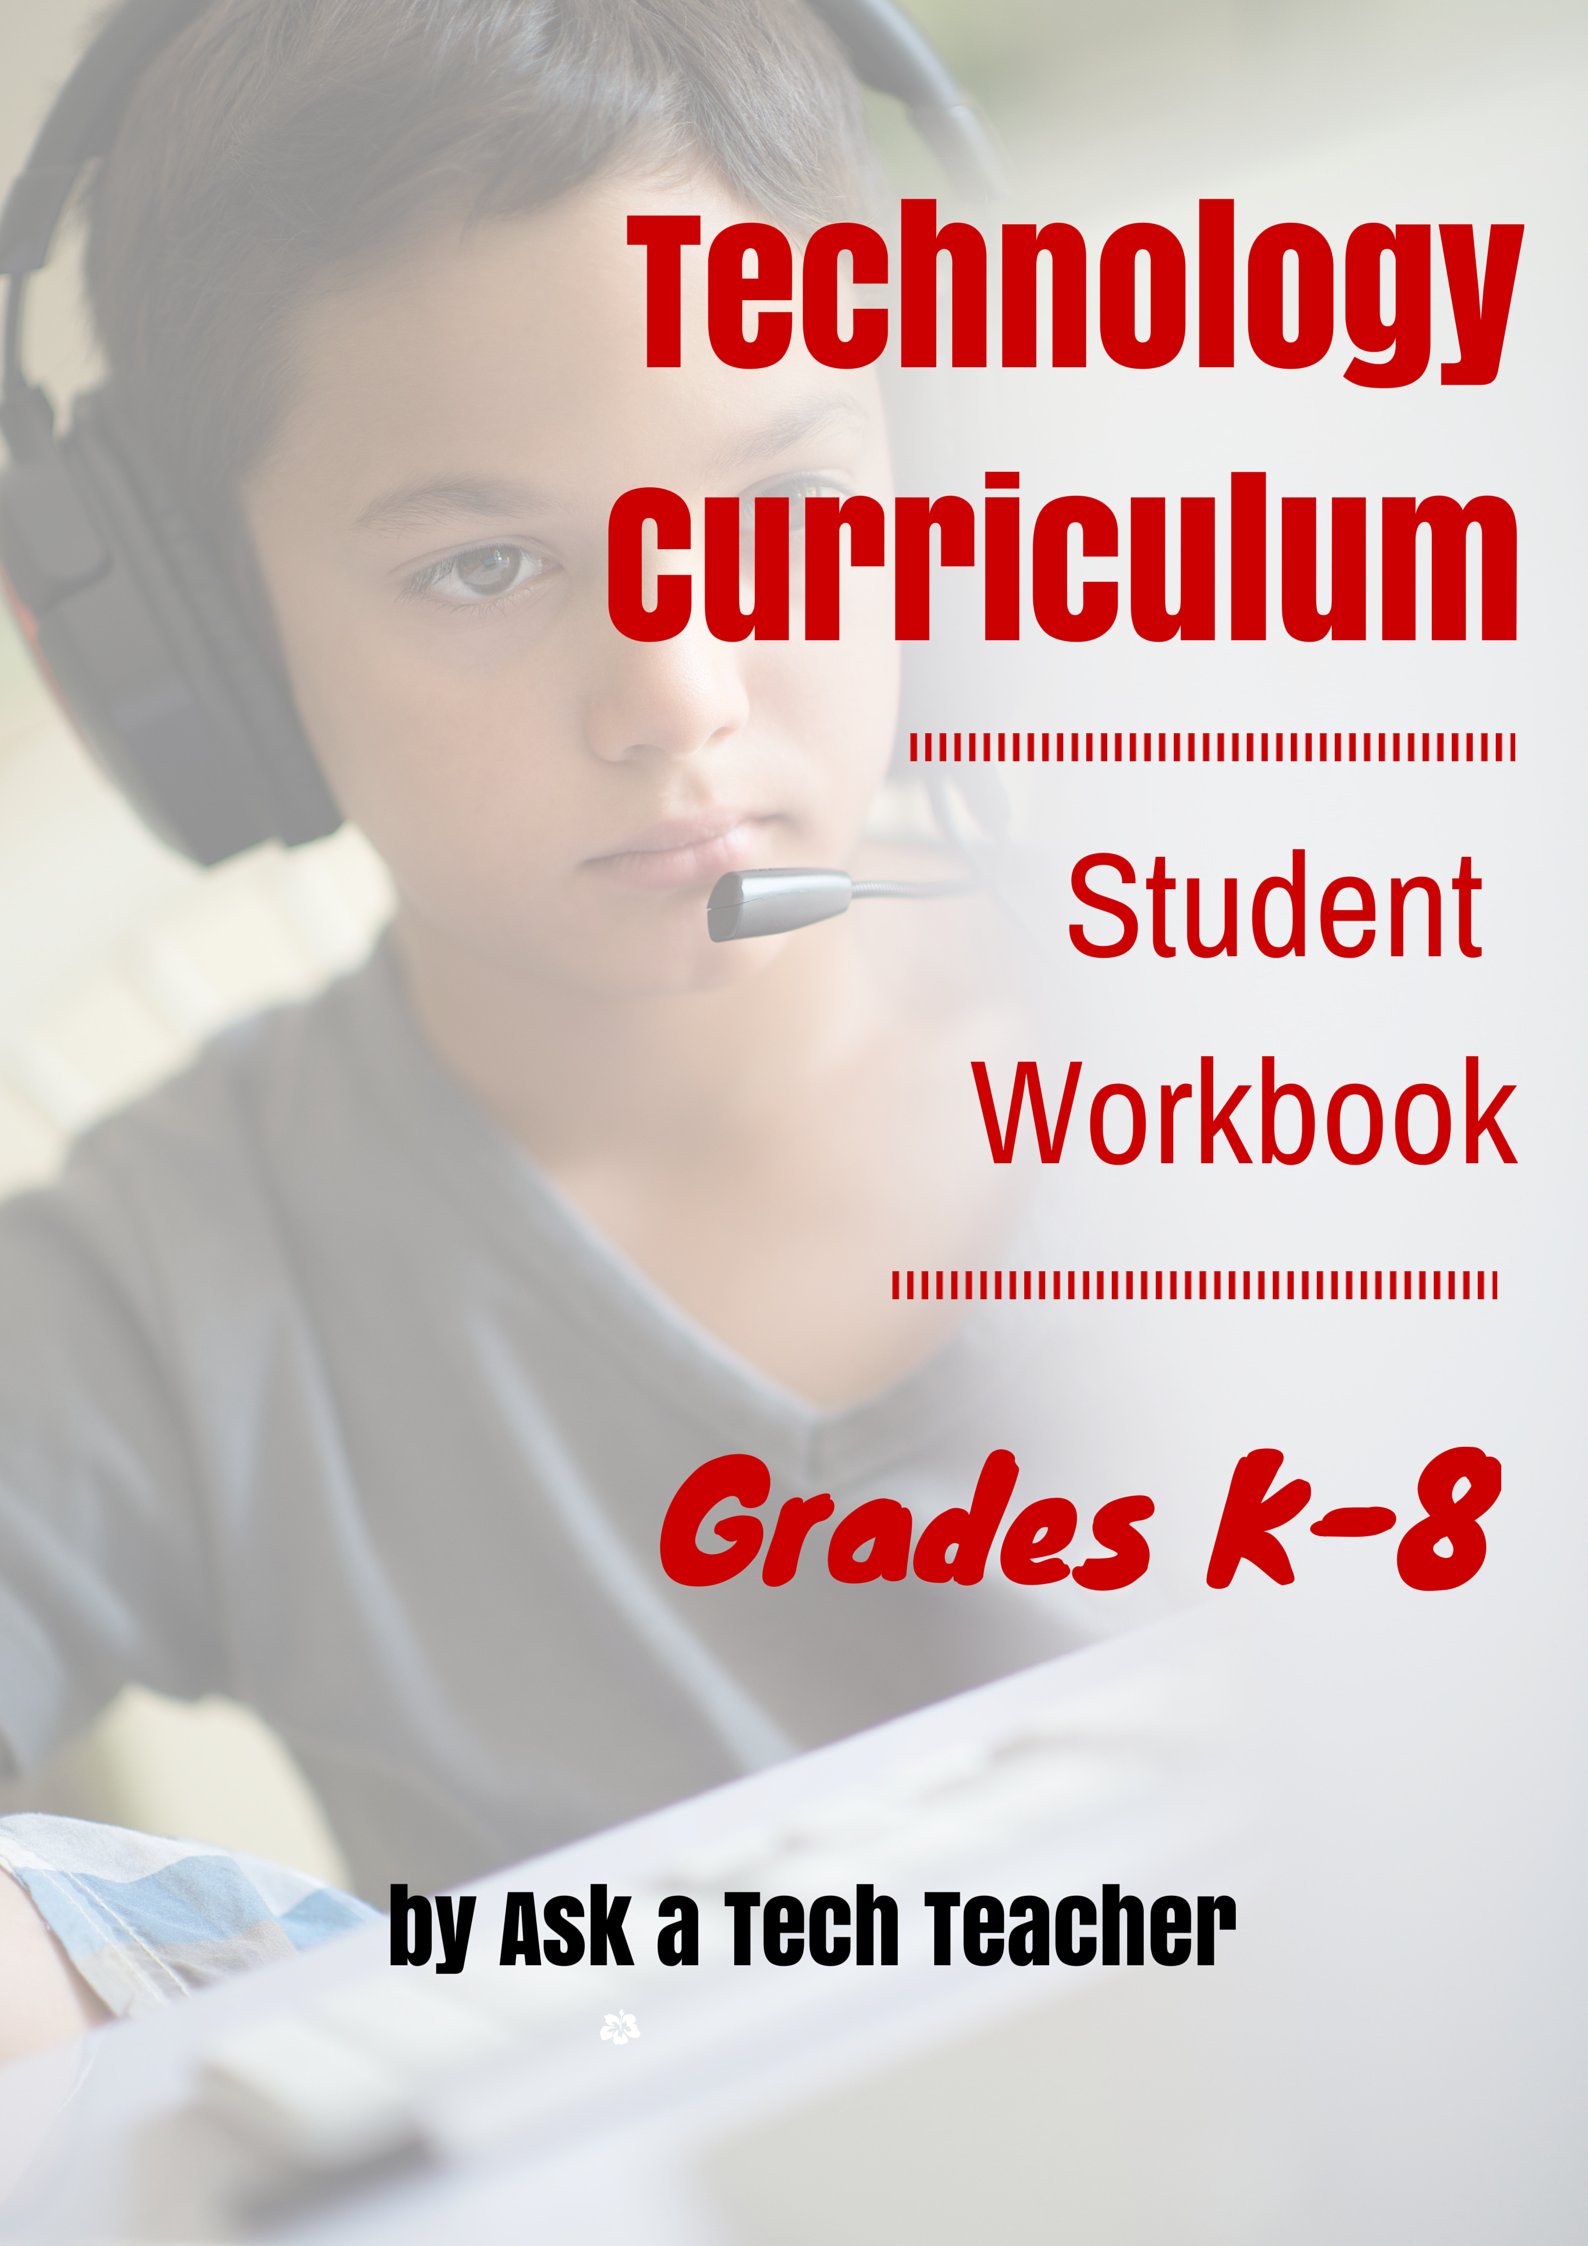 student technology curriculum